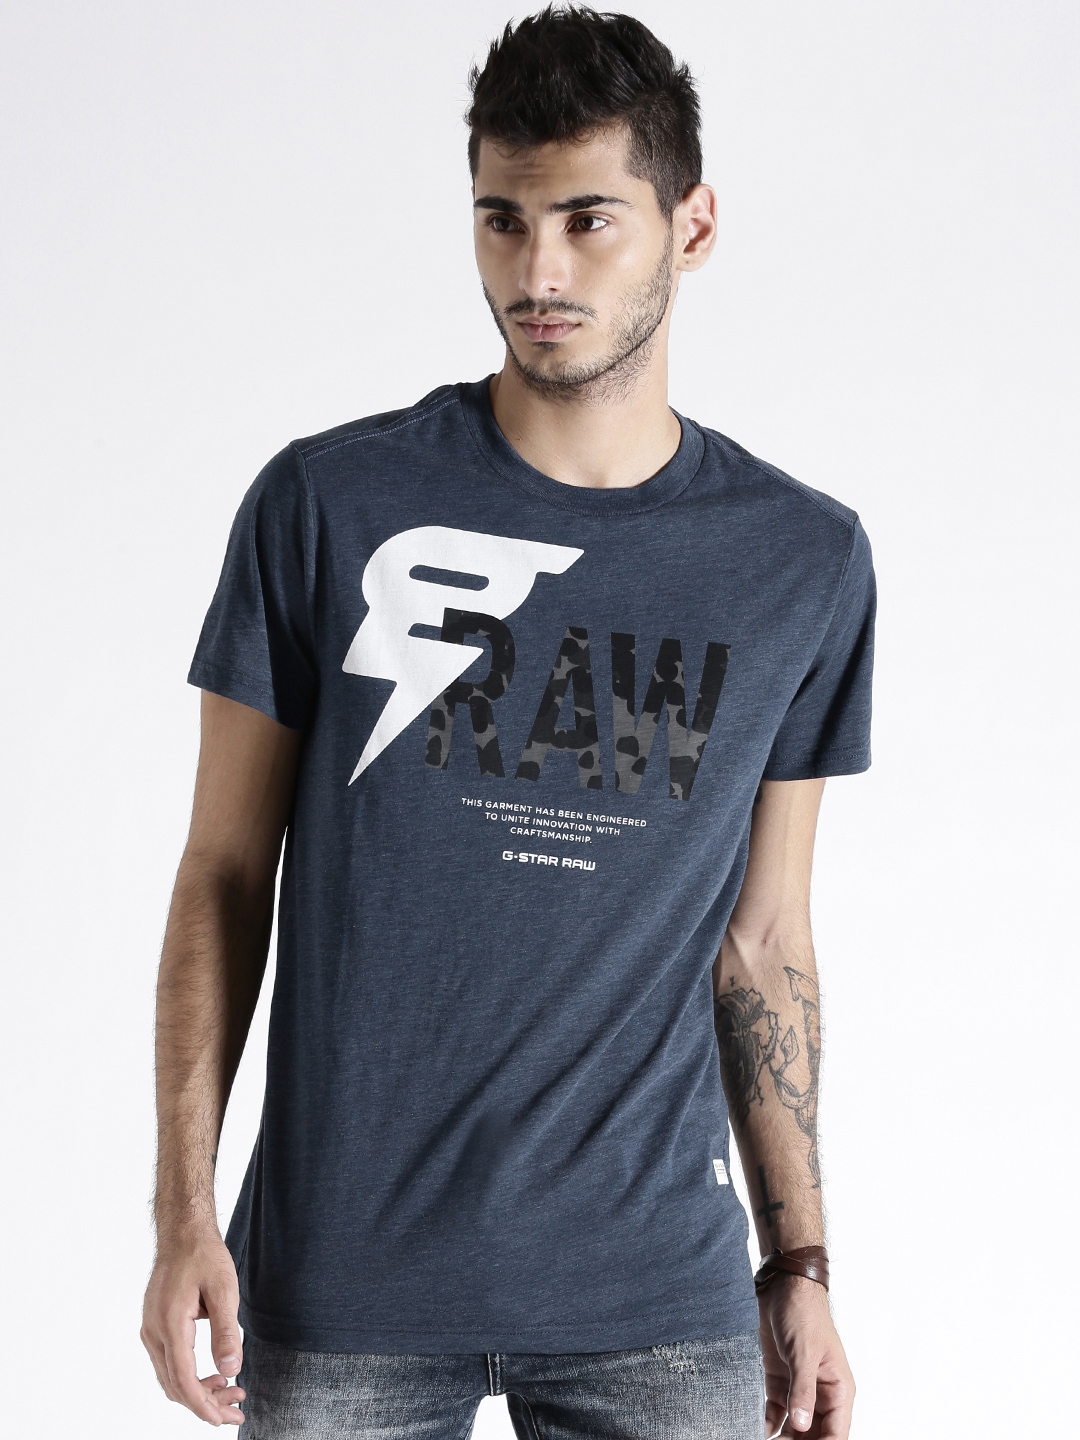 Buy G STAR RAW Printed T Shirt - Tshirts for Men 1474223 | Myntra